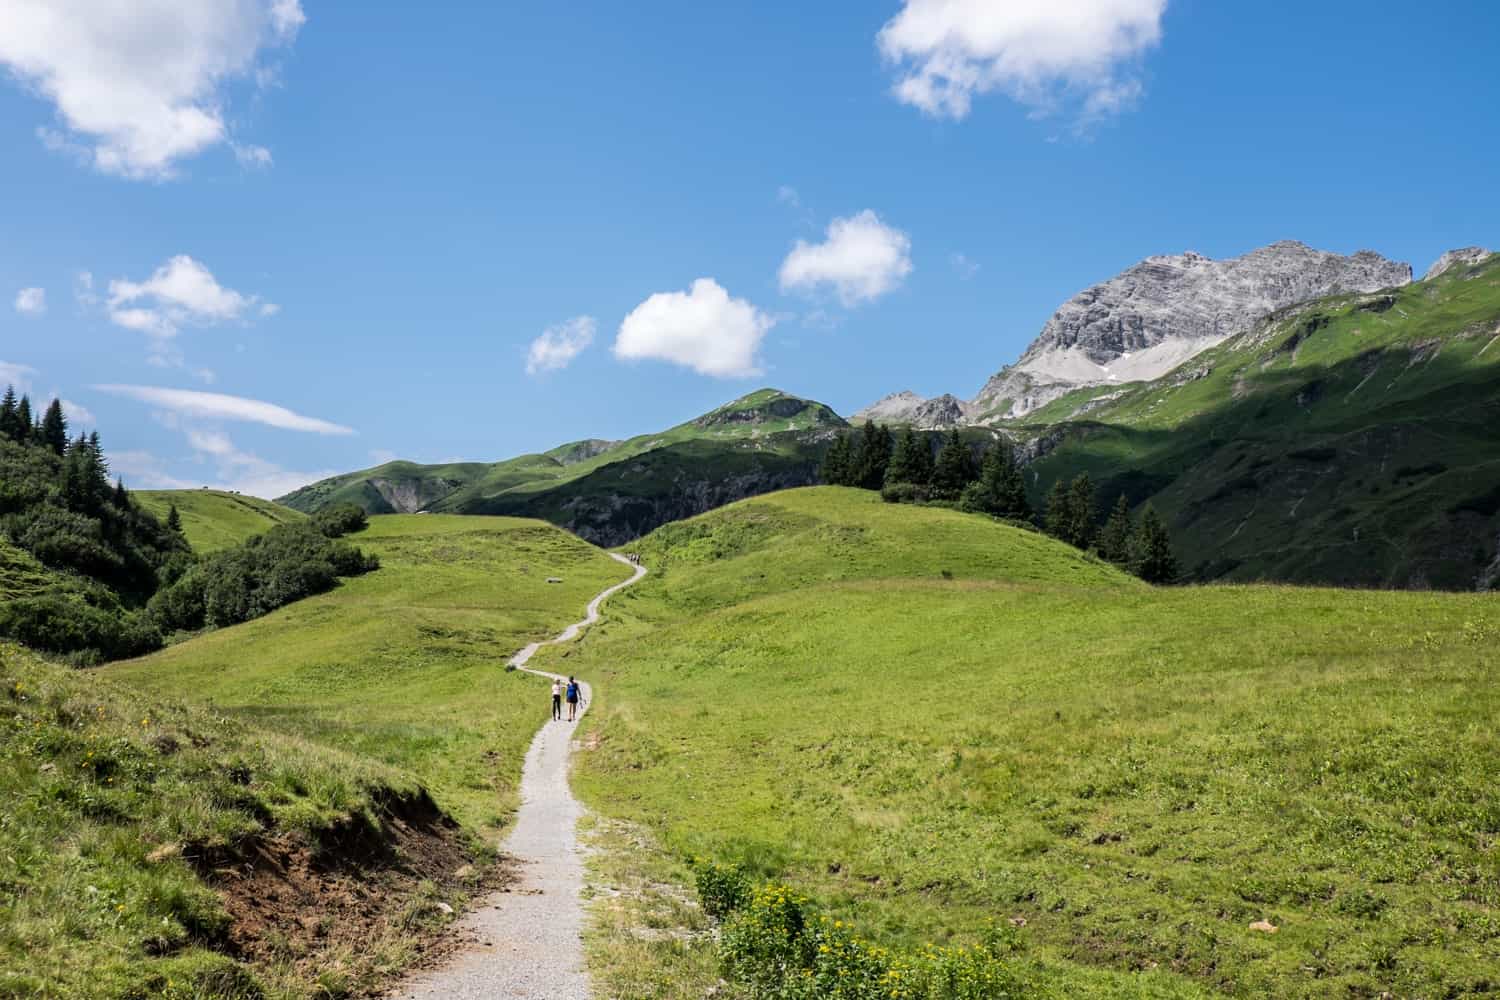 Hiking the alpine pastures of Lech, Austria